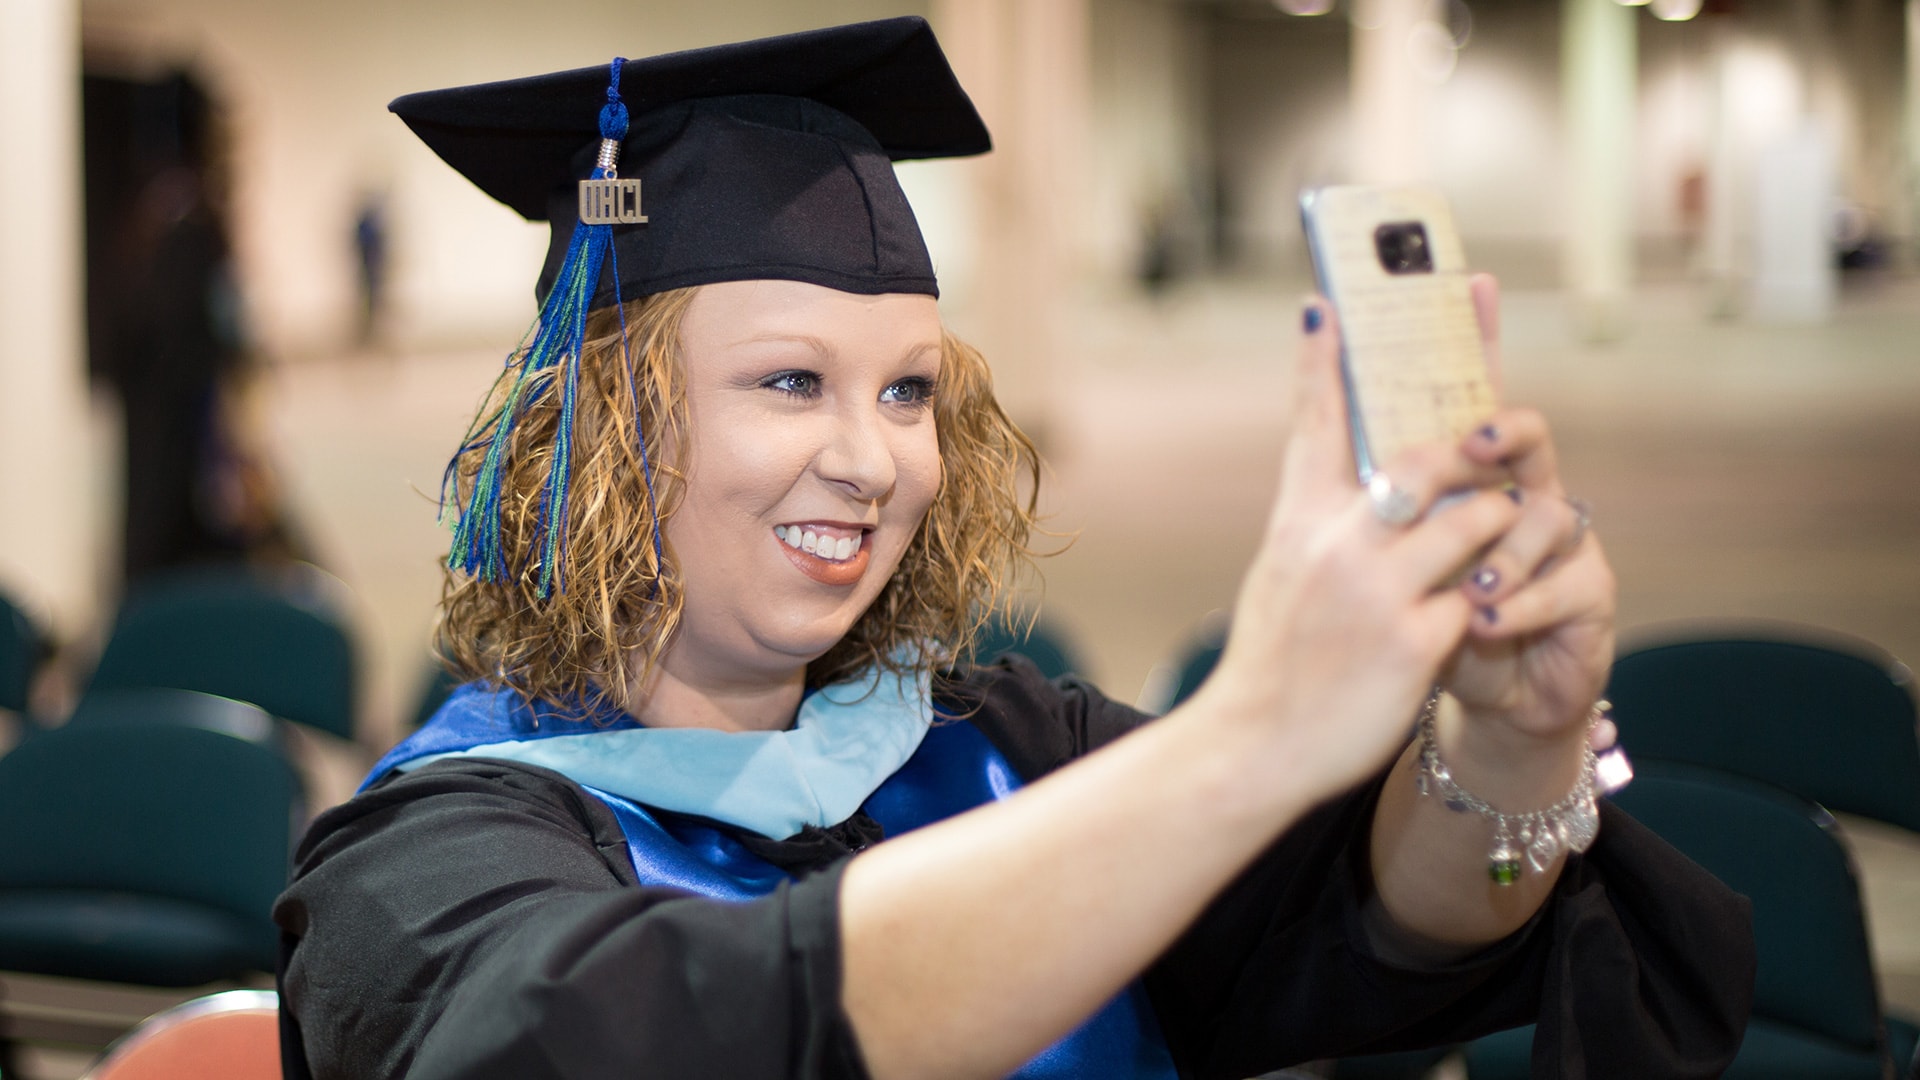 UHCL graduate selfie